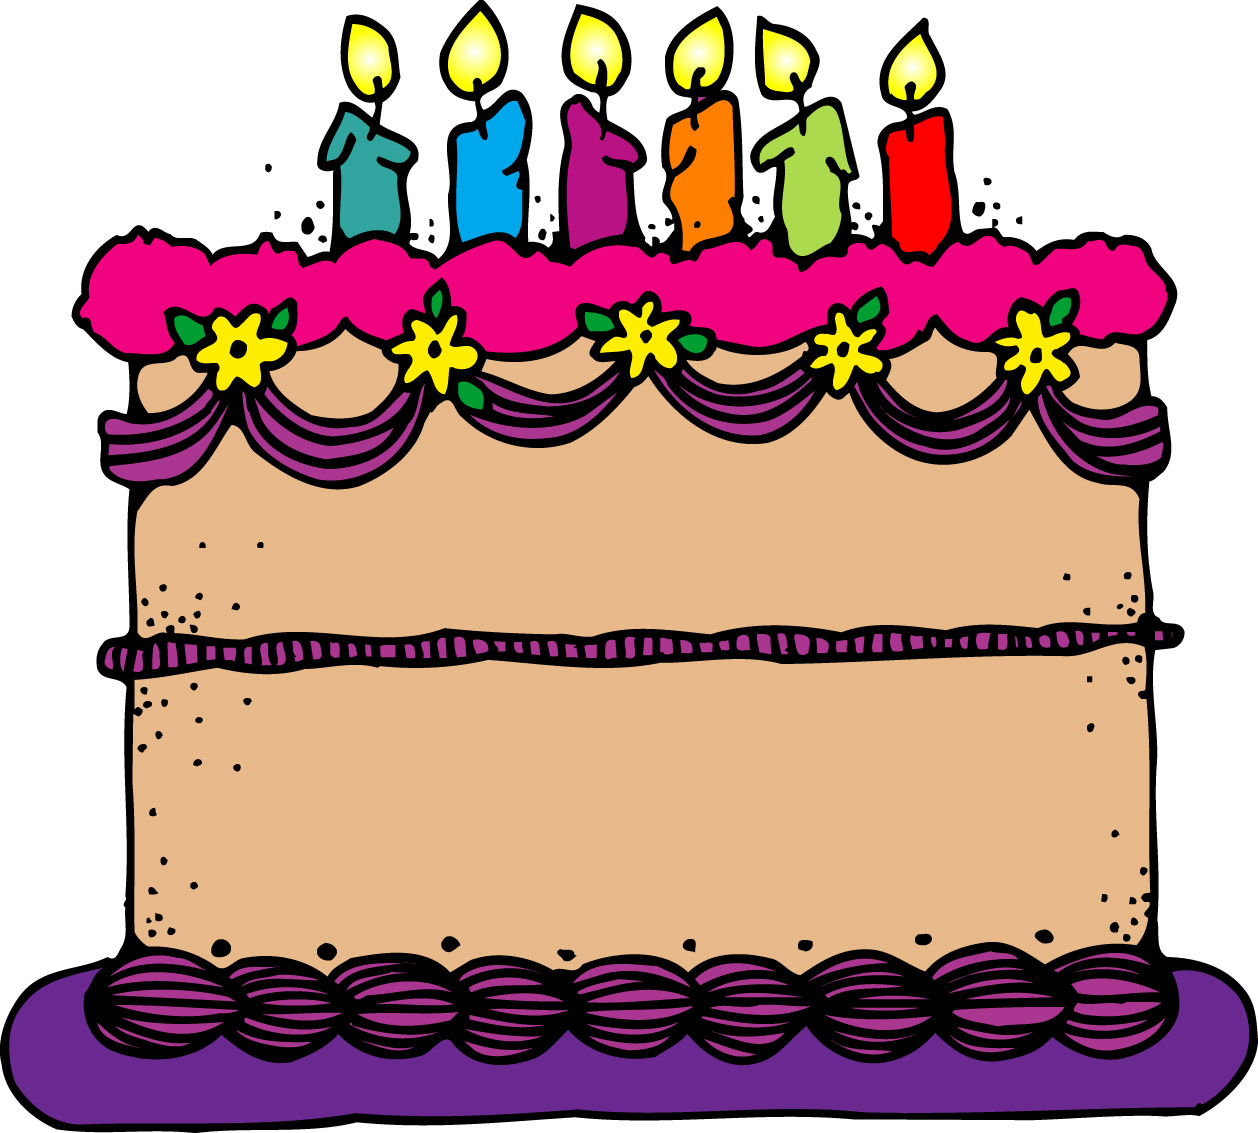 Birthday Cake Clipart - ClipArt Best